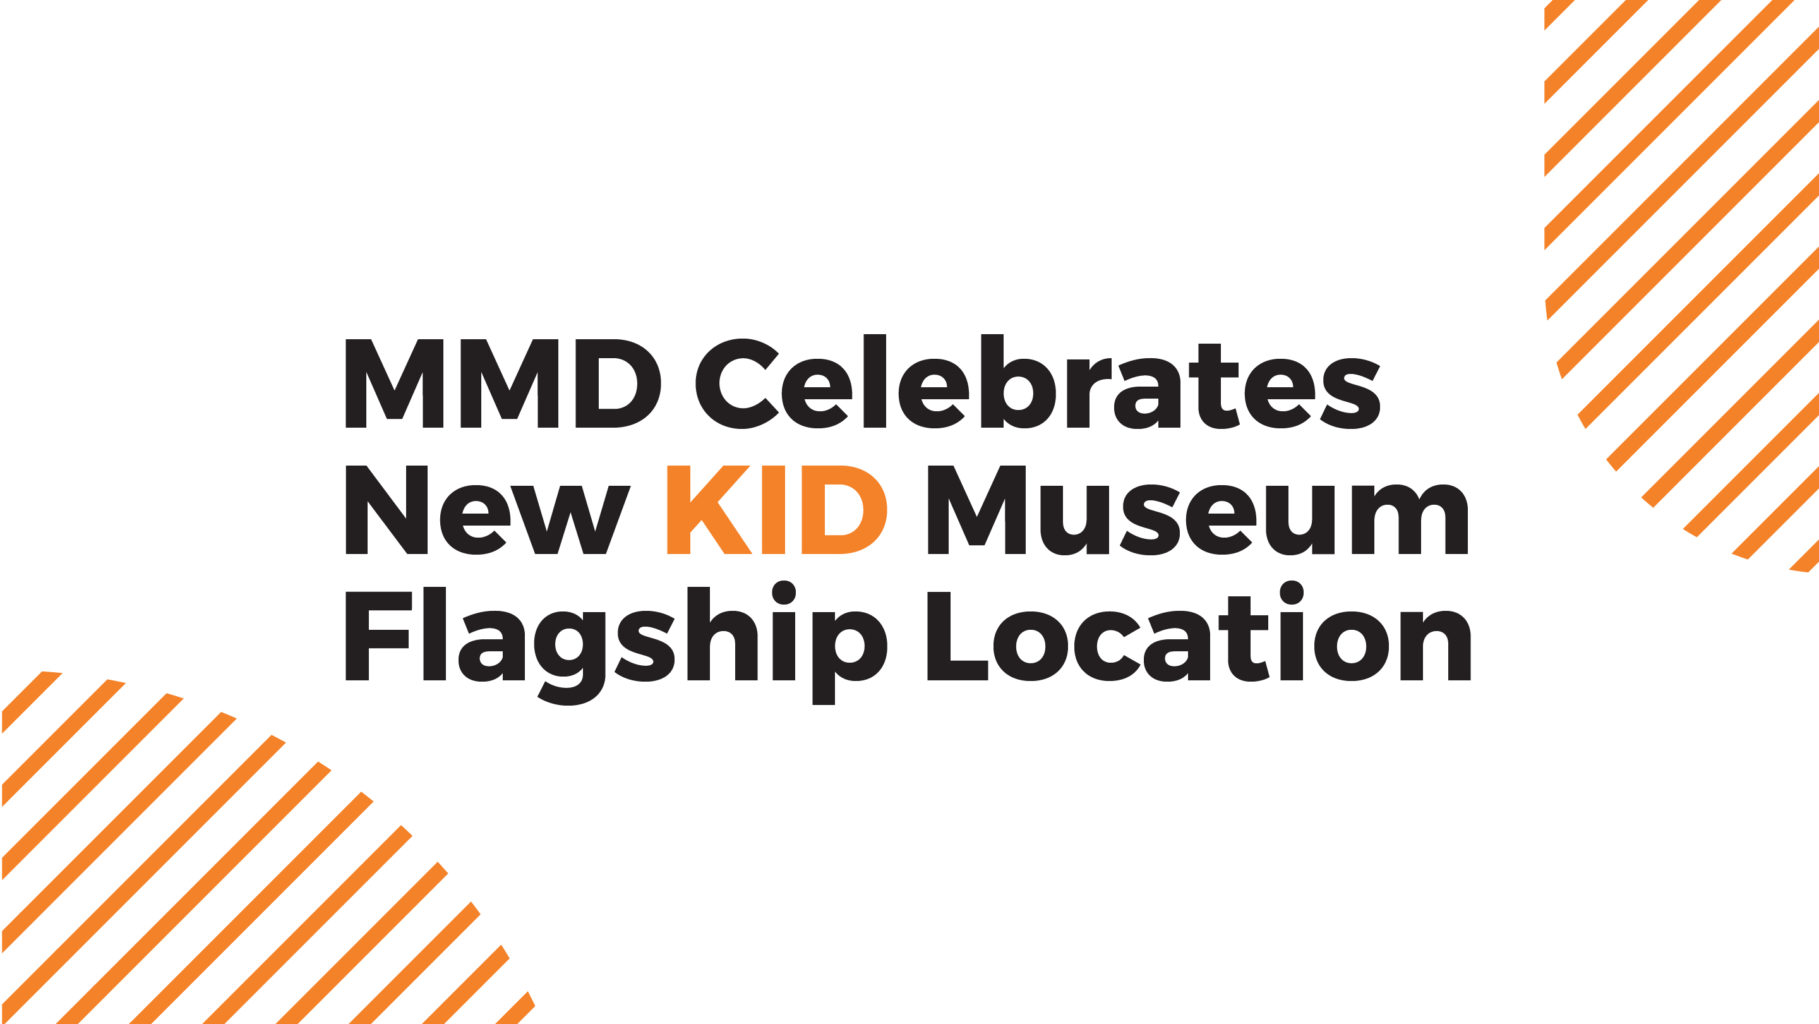 MMD Celebrates New KID Museum Flagship Location